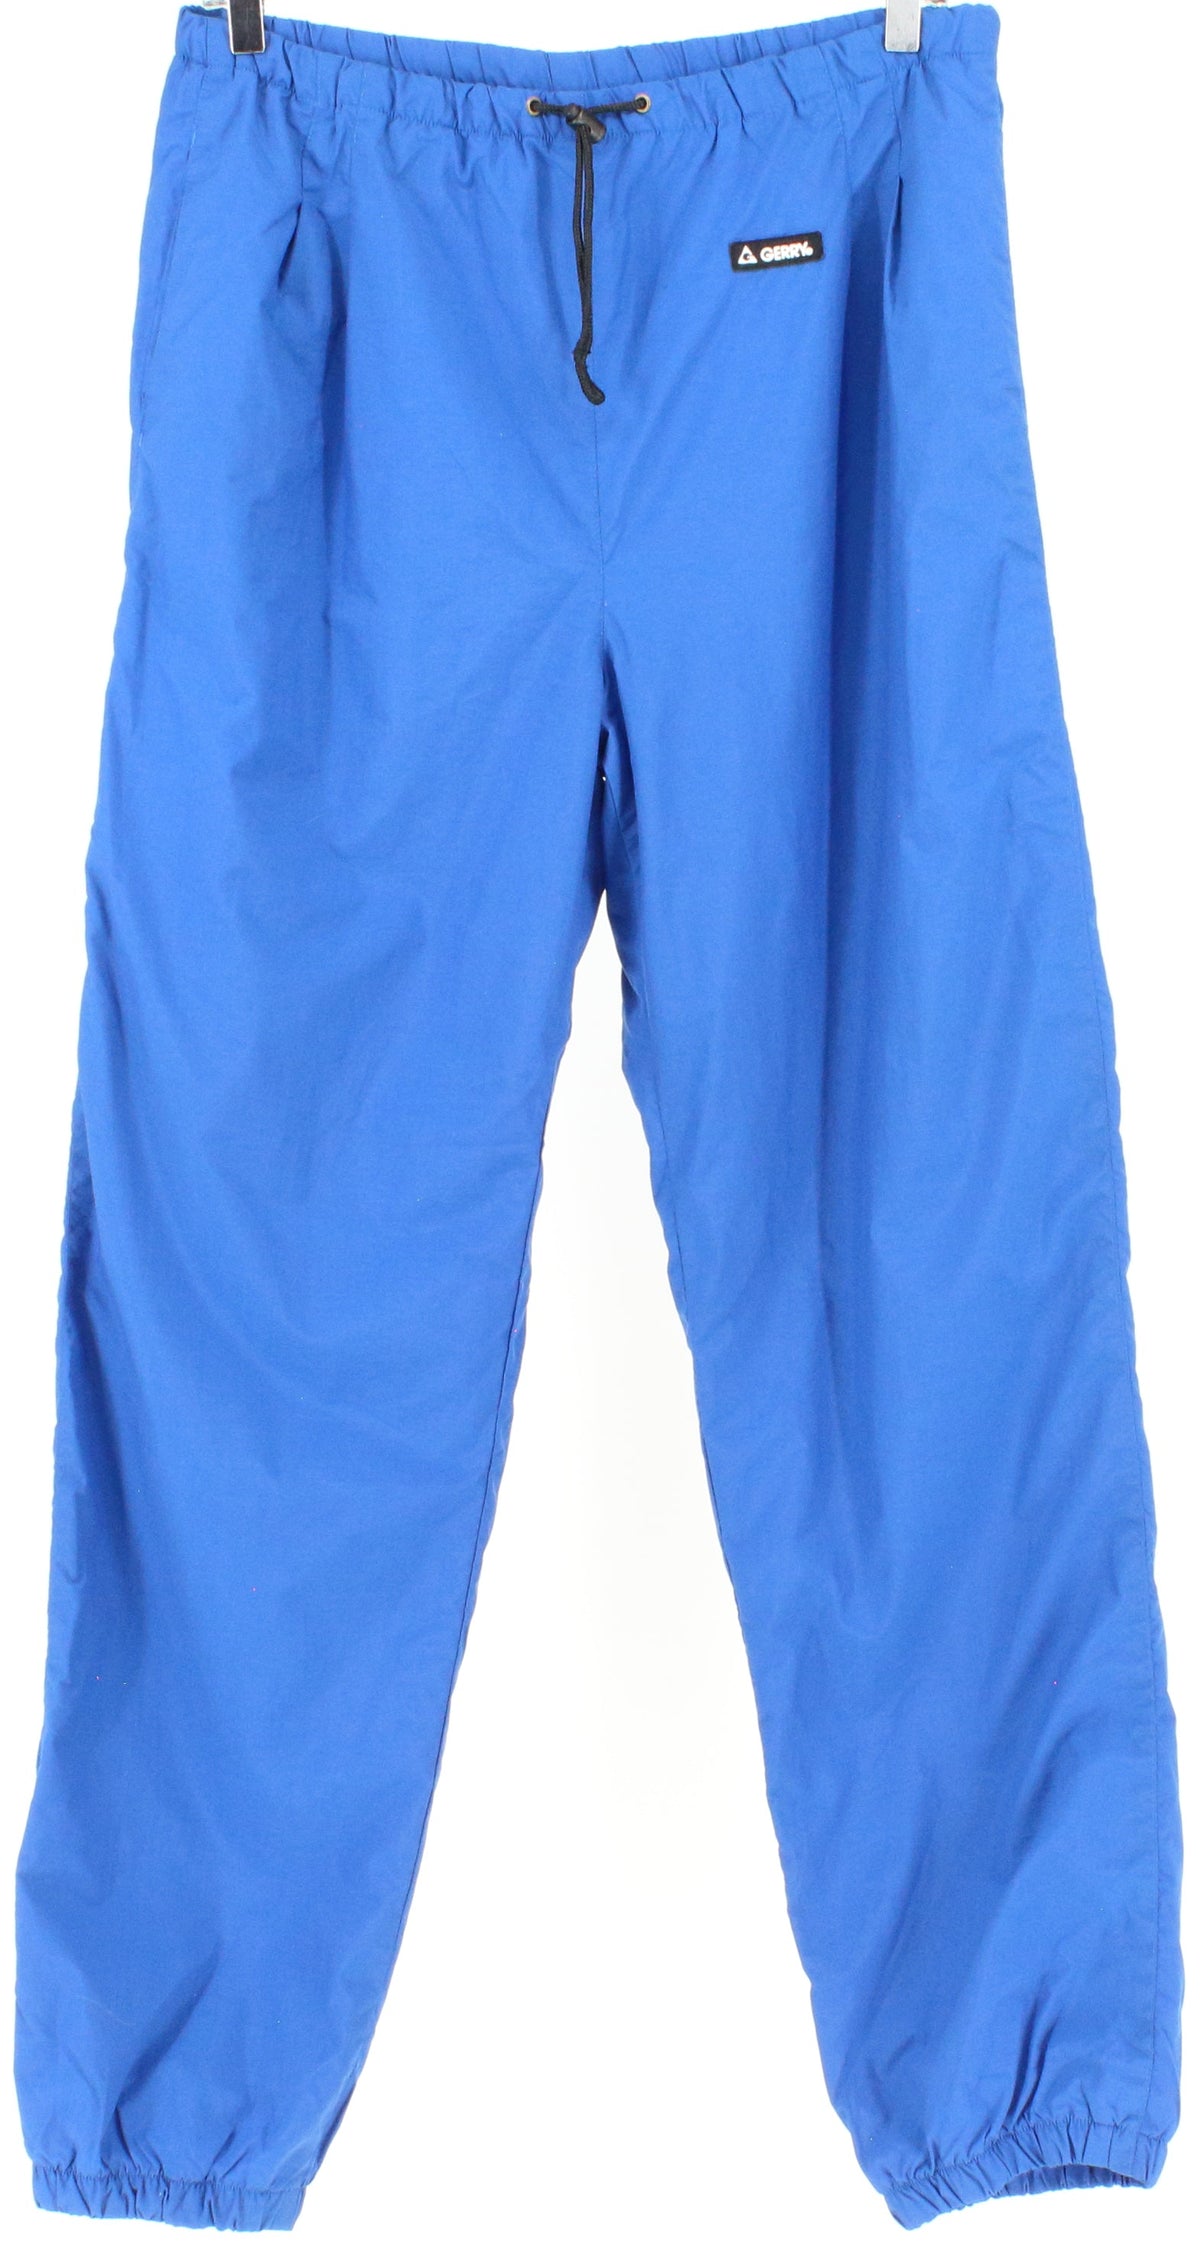 Gerry Royal Blue Nylon Pants